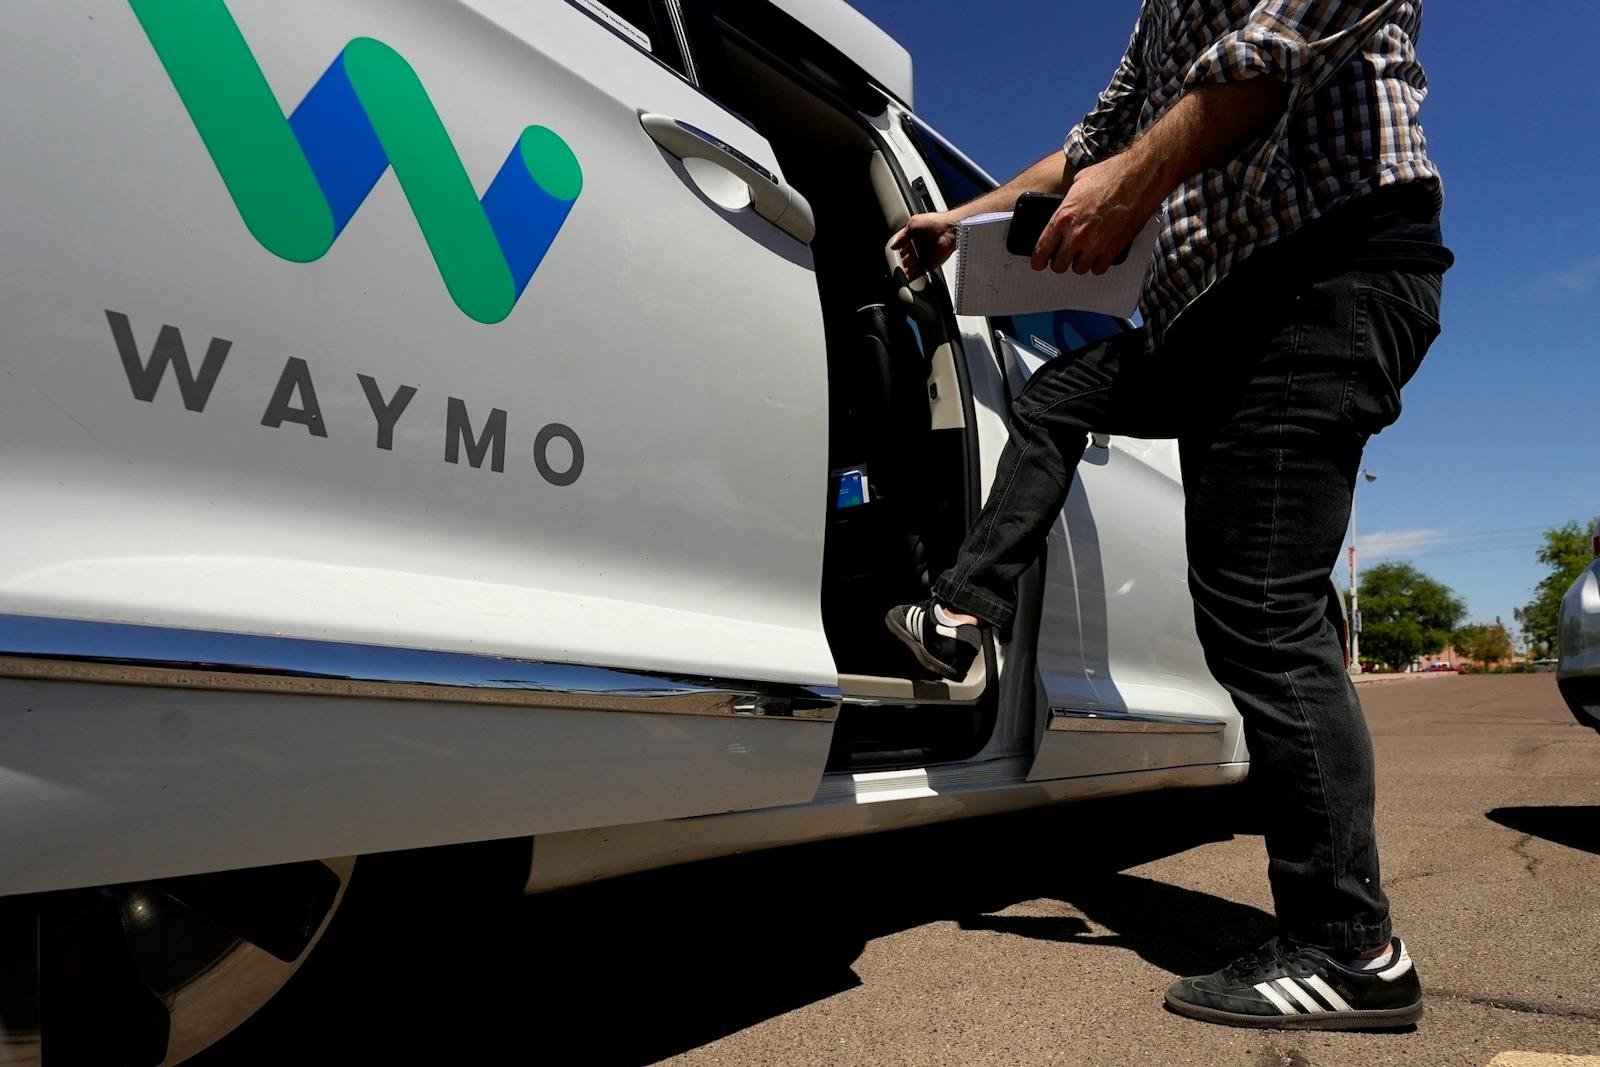 A Waymo minivan arrives to pick up passengers for an autonomous vehicle ride, Wednesday, April 7, 2021, in Mesa, Ariz. Photo: AP